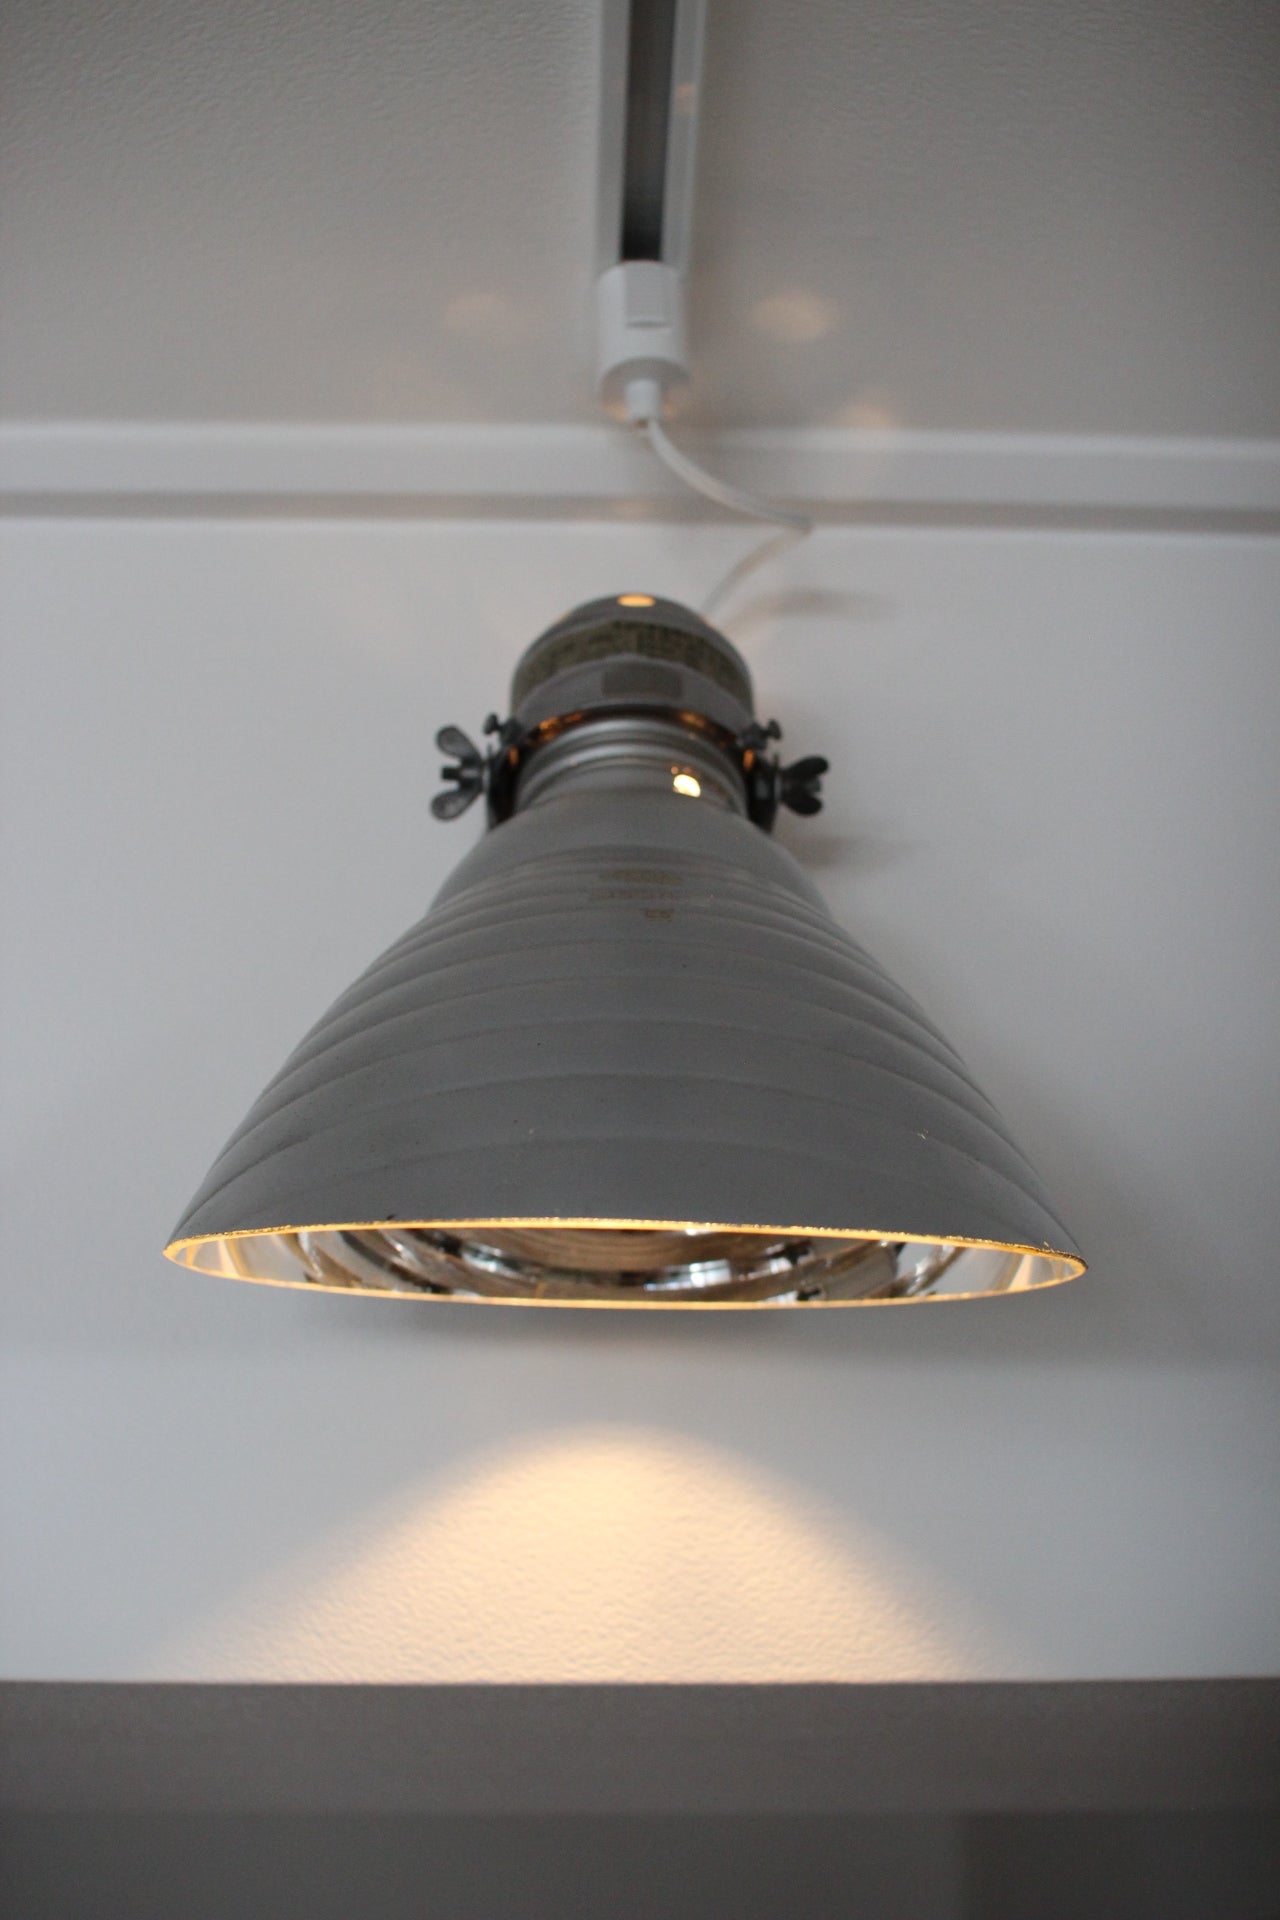 Zeiss Ikon Wall lamp / Adolf Meyer